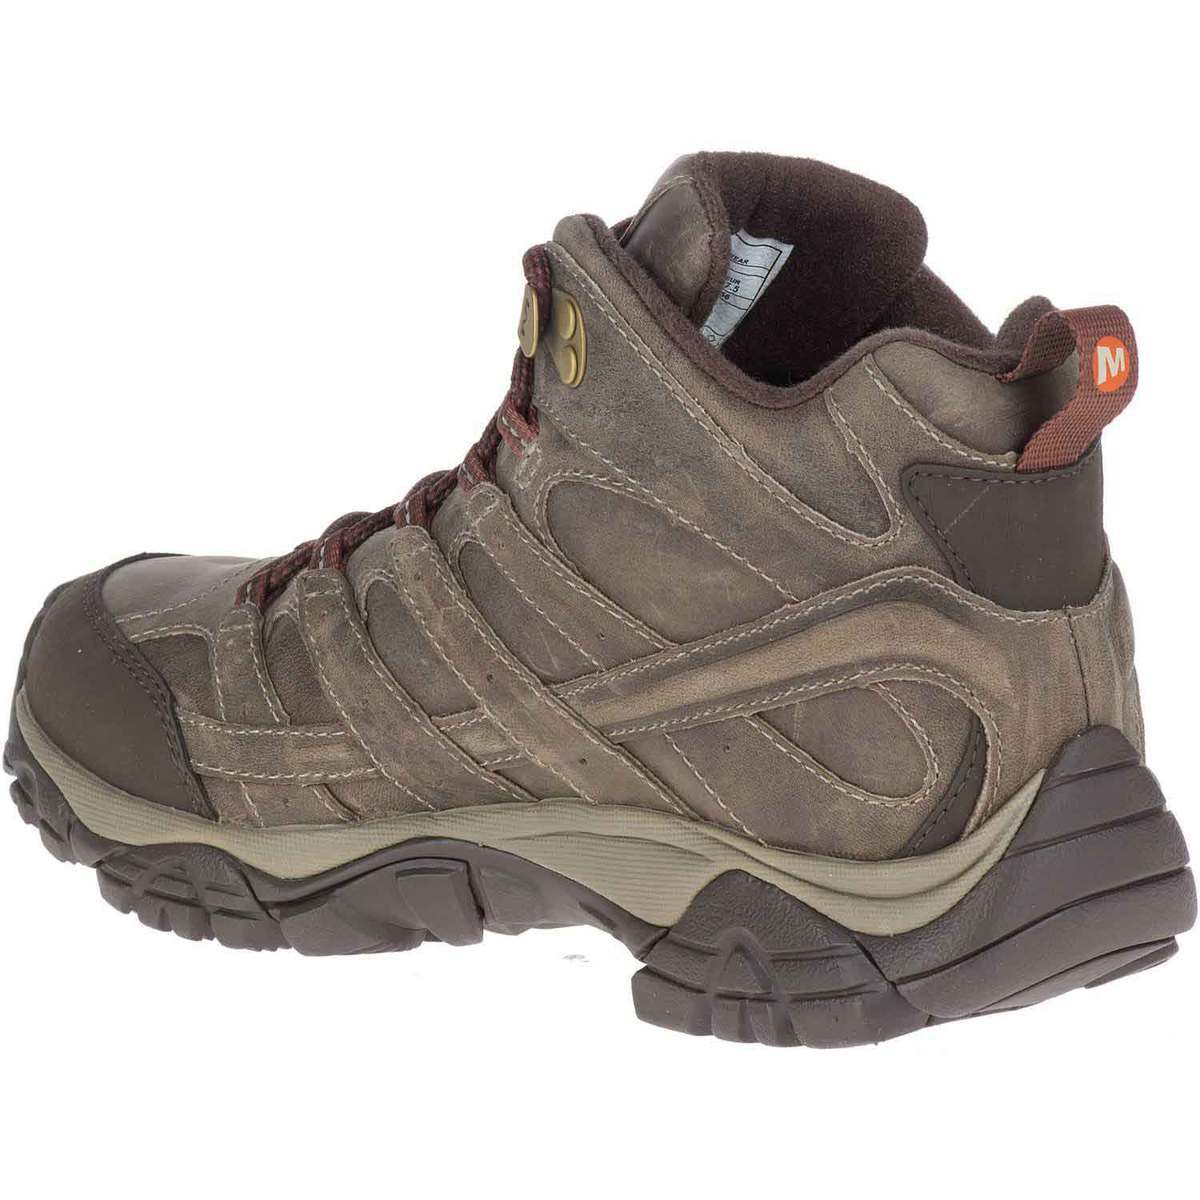 Merrell Women's Moab 2 Prime Waterproof Mid Hiking Boots - Brindle ...